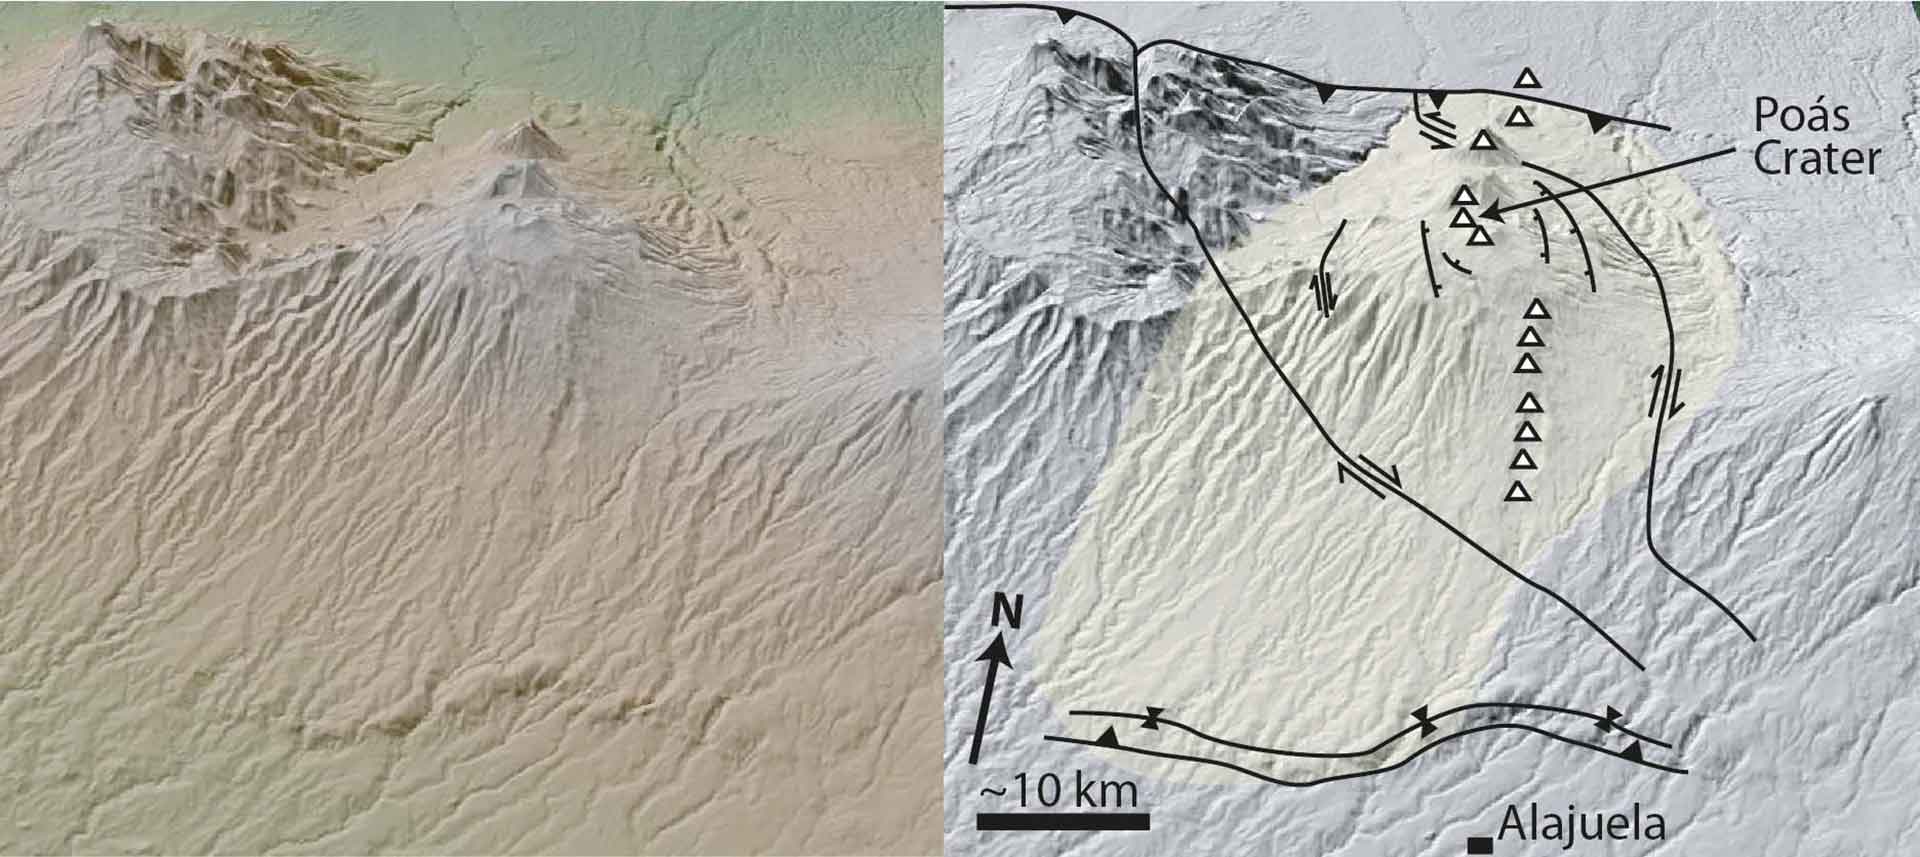 Oblique image showing the whole shield-like stratovolcano shape of Poás